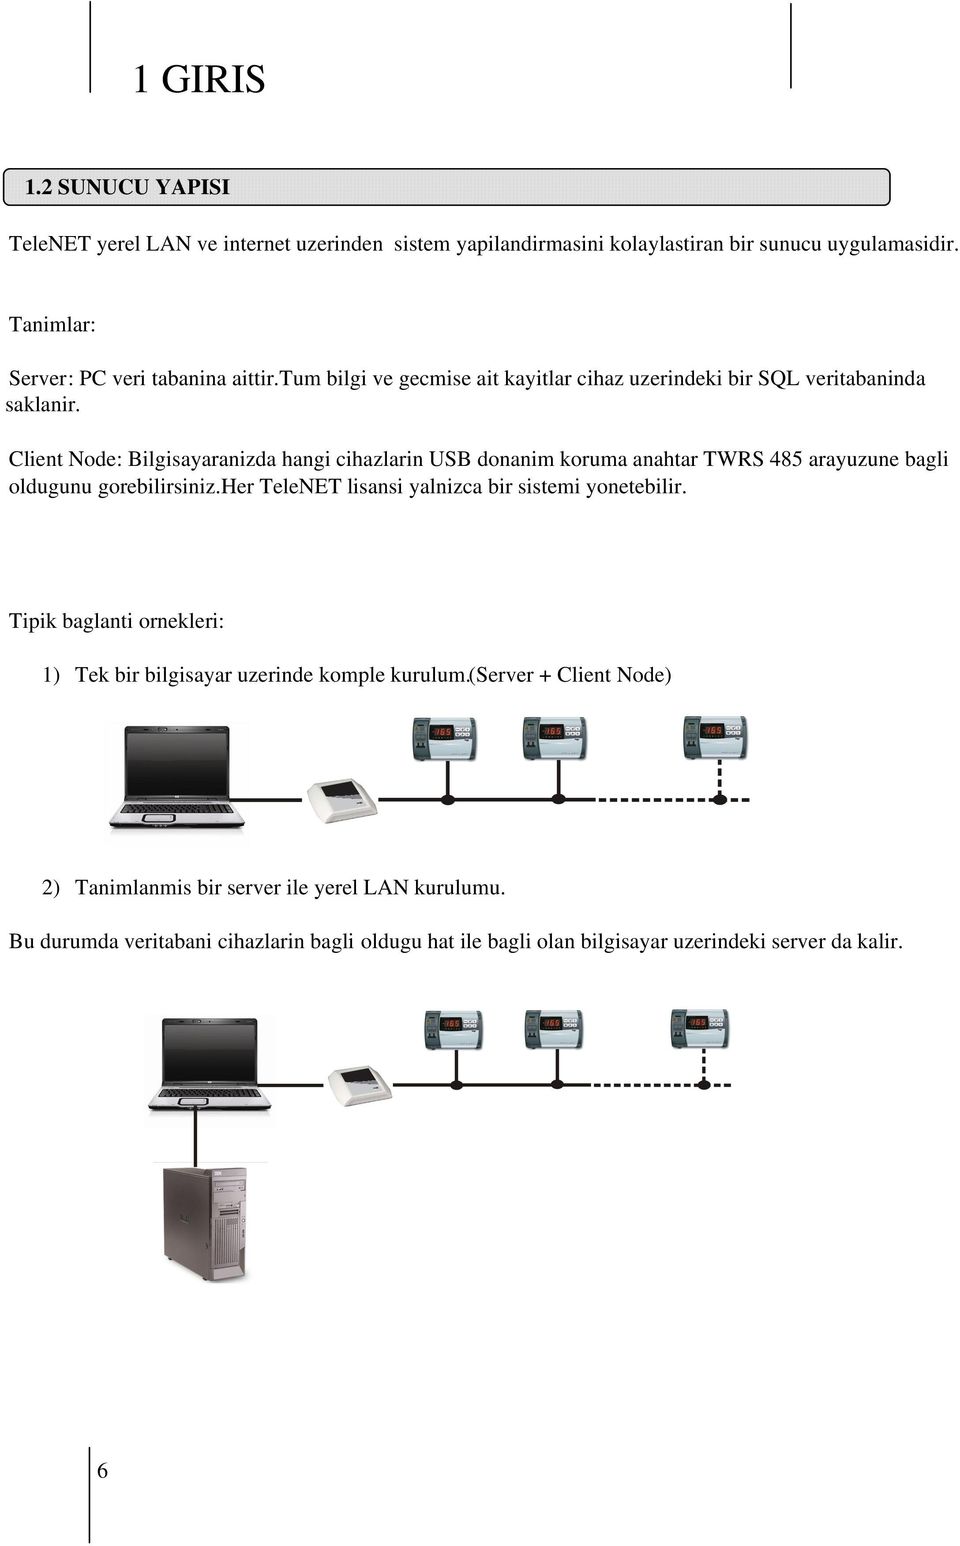 Client Node: Bilgisayaranizda hangi cihazlarin USB donanim koruma anahtar TWRS 485 arayuzune bagli oldugunu gorebilirsiniz.